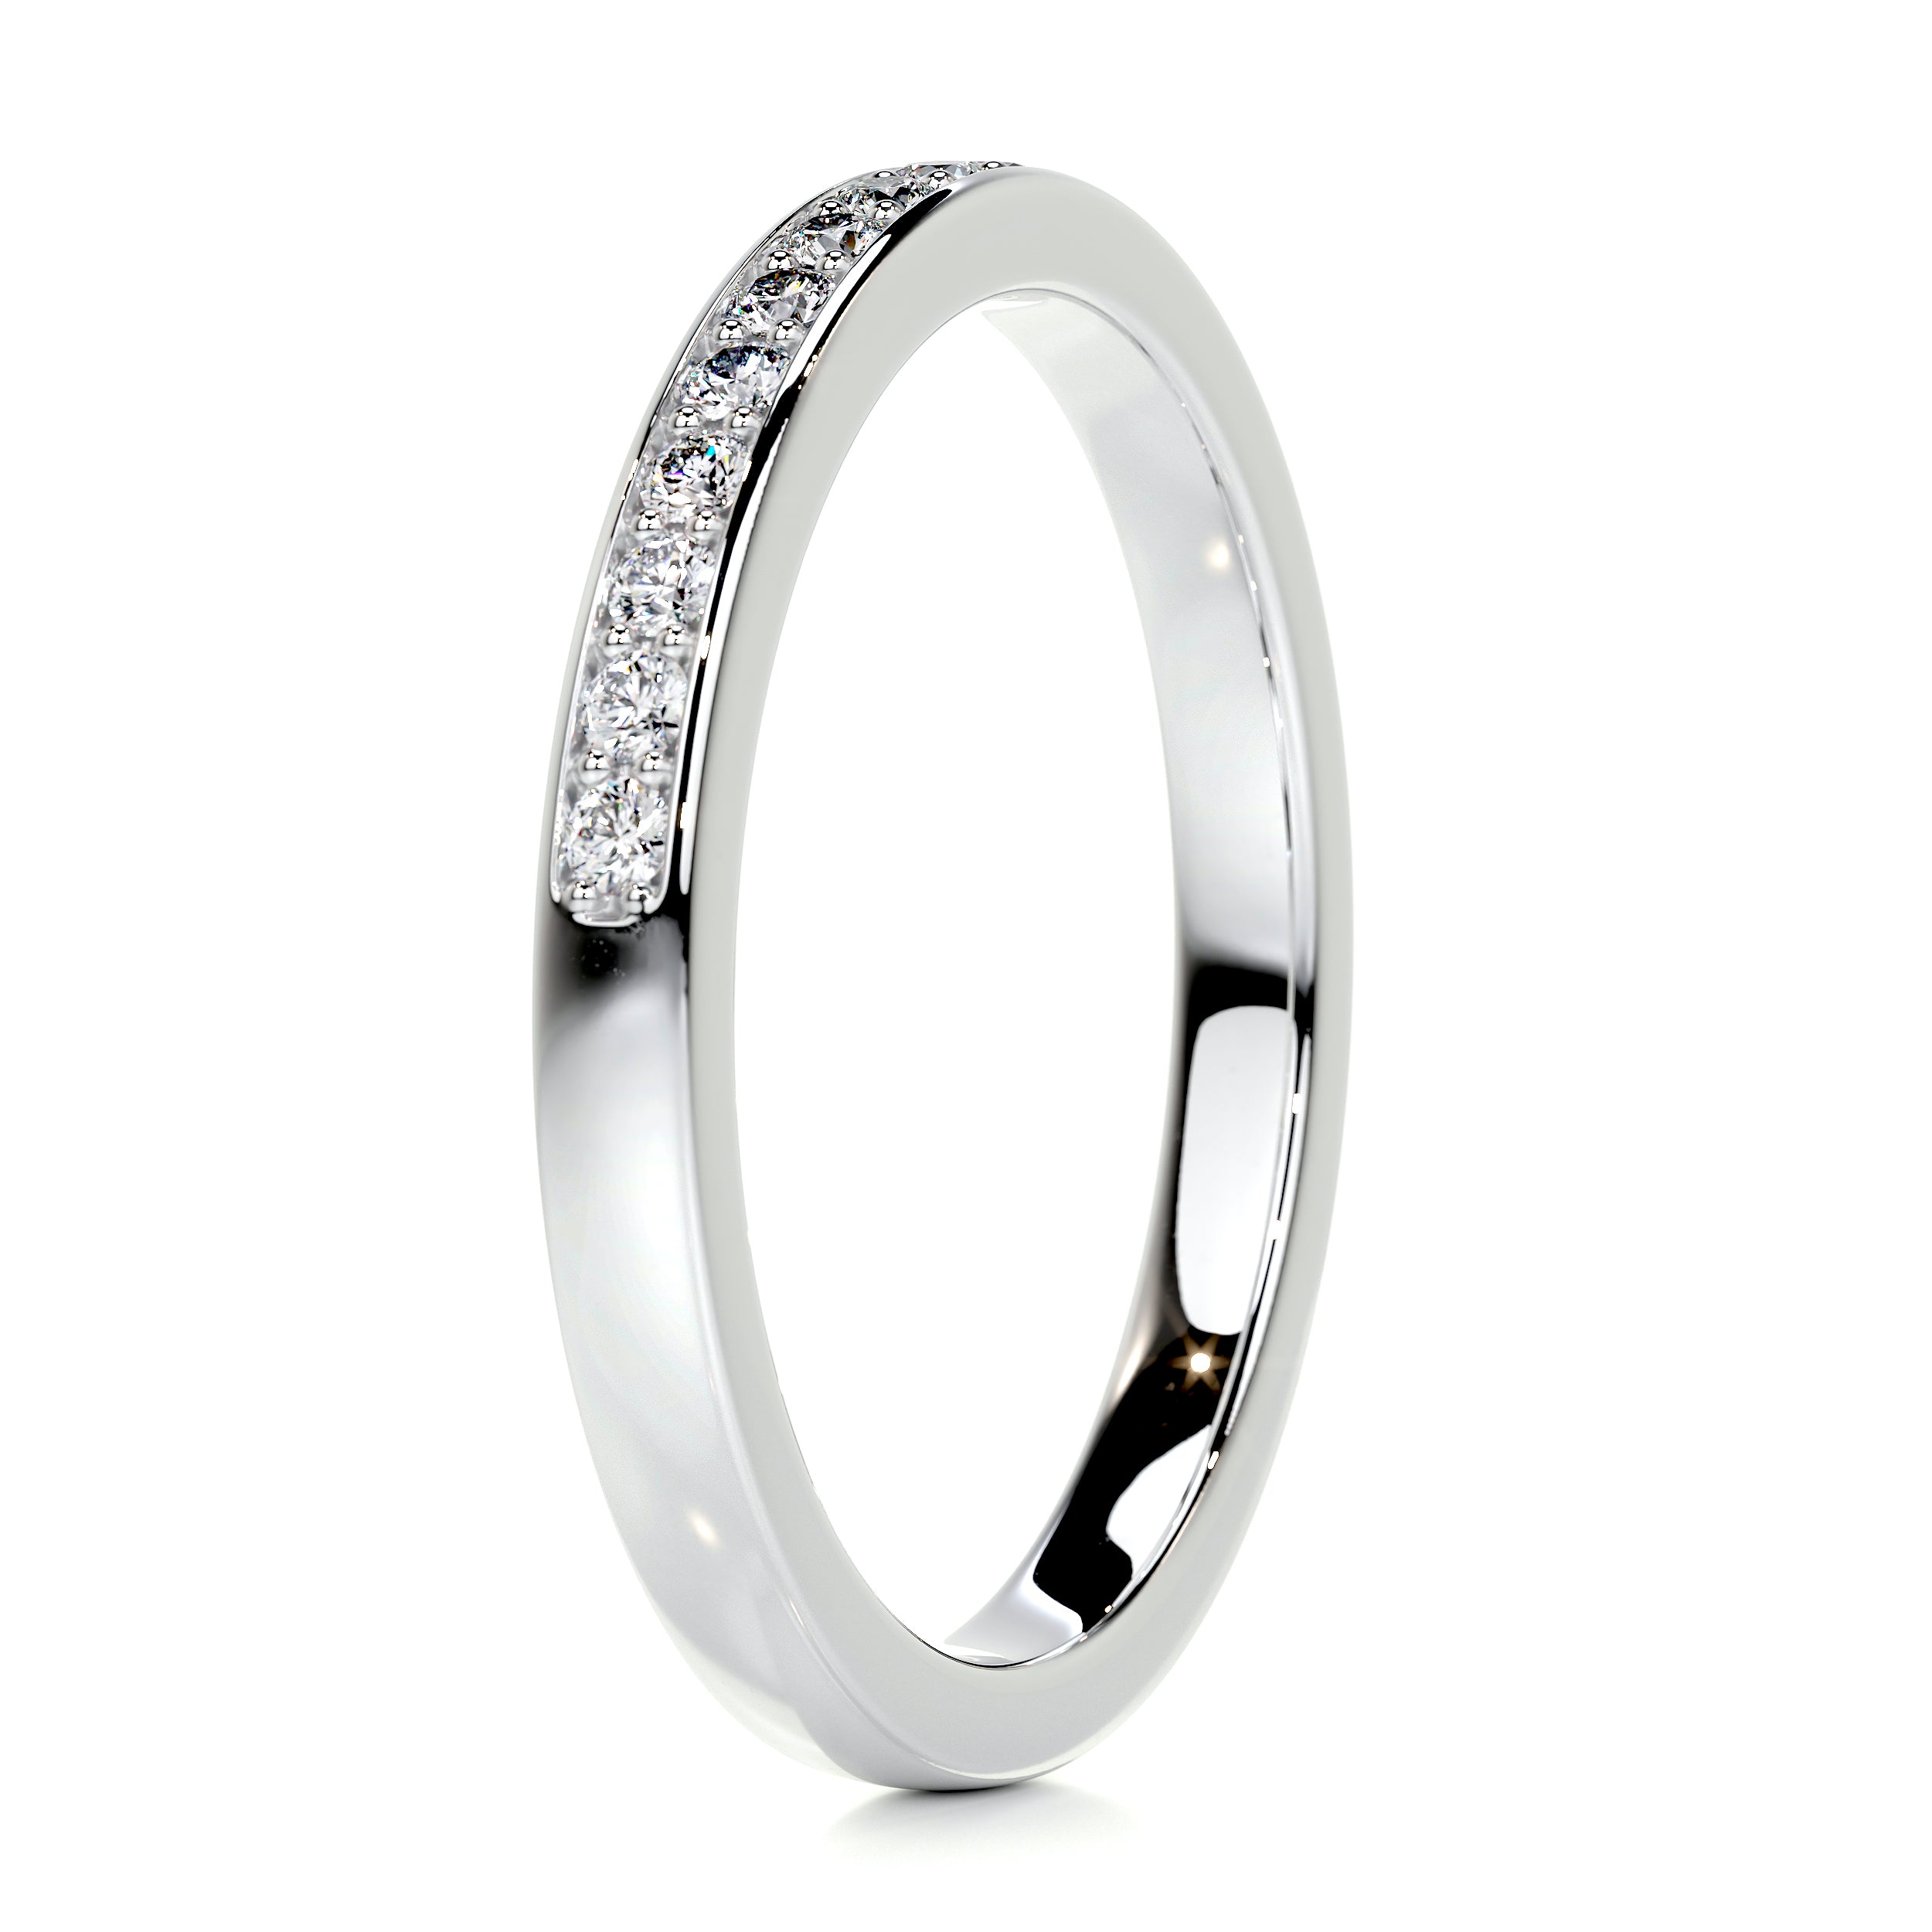 Giselle Diamond Wedding Ring   (0.2 Carat) -14K White Gold